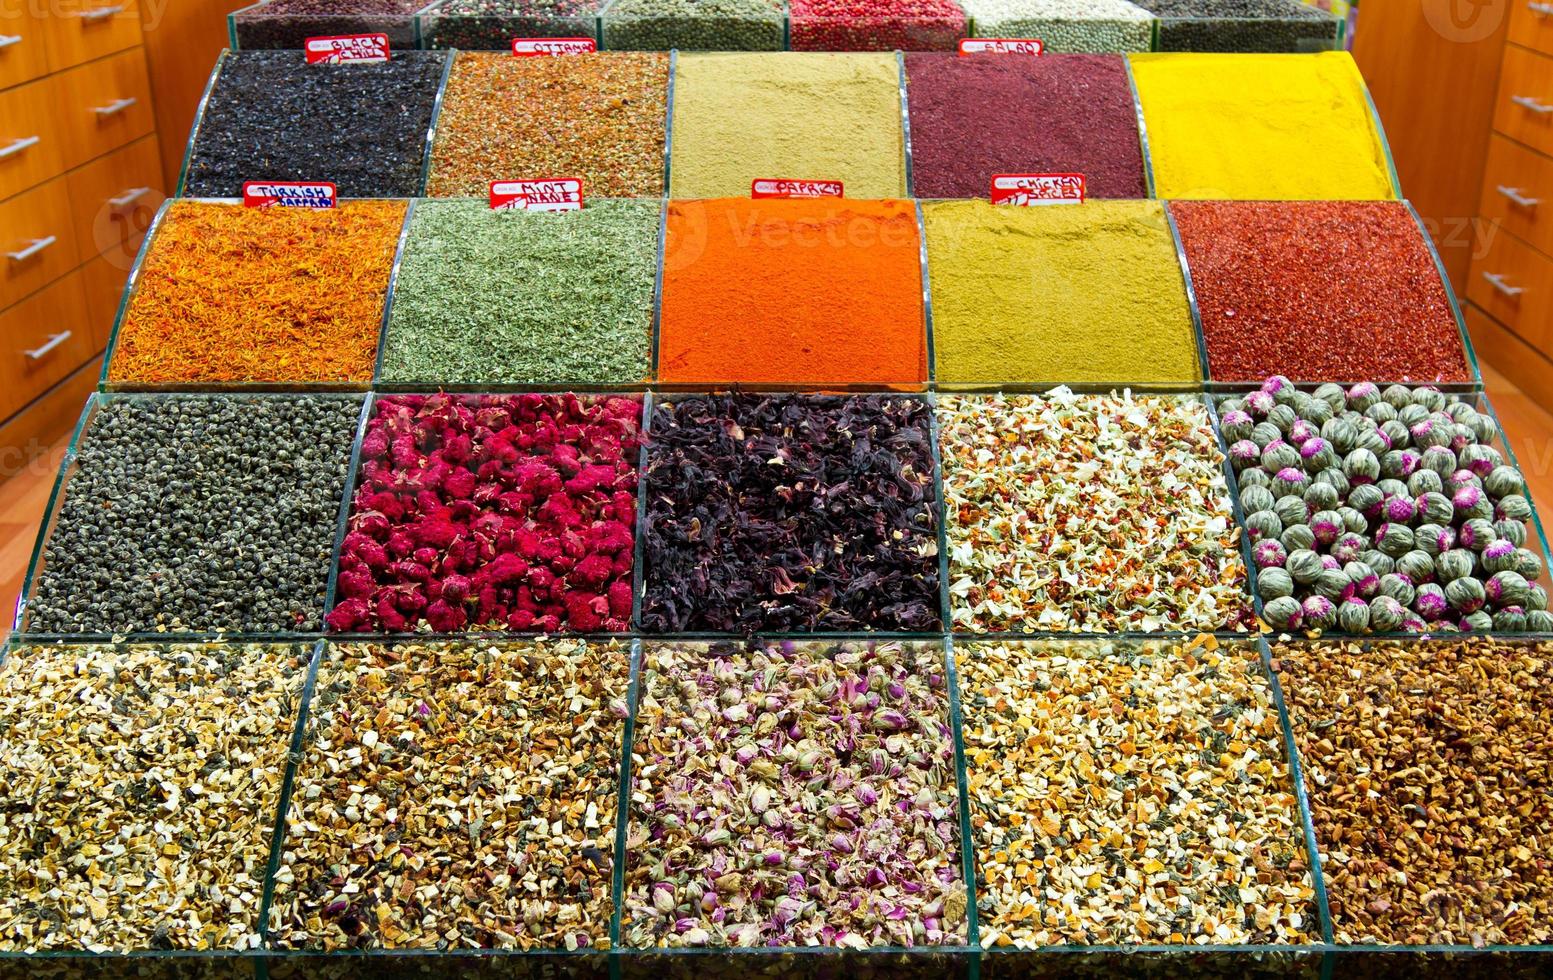 specerijen en thee van kruid bazar, Istanbul foto